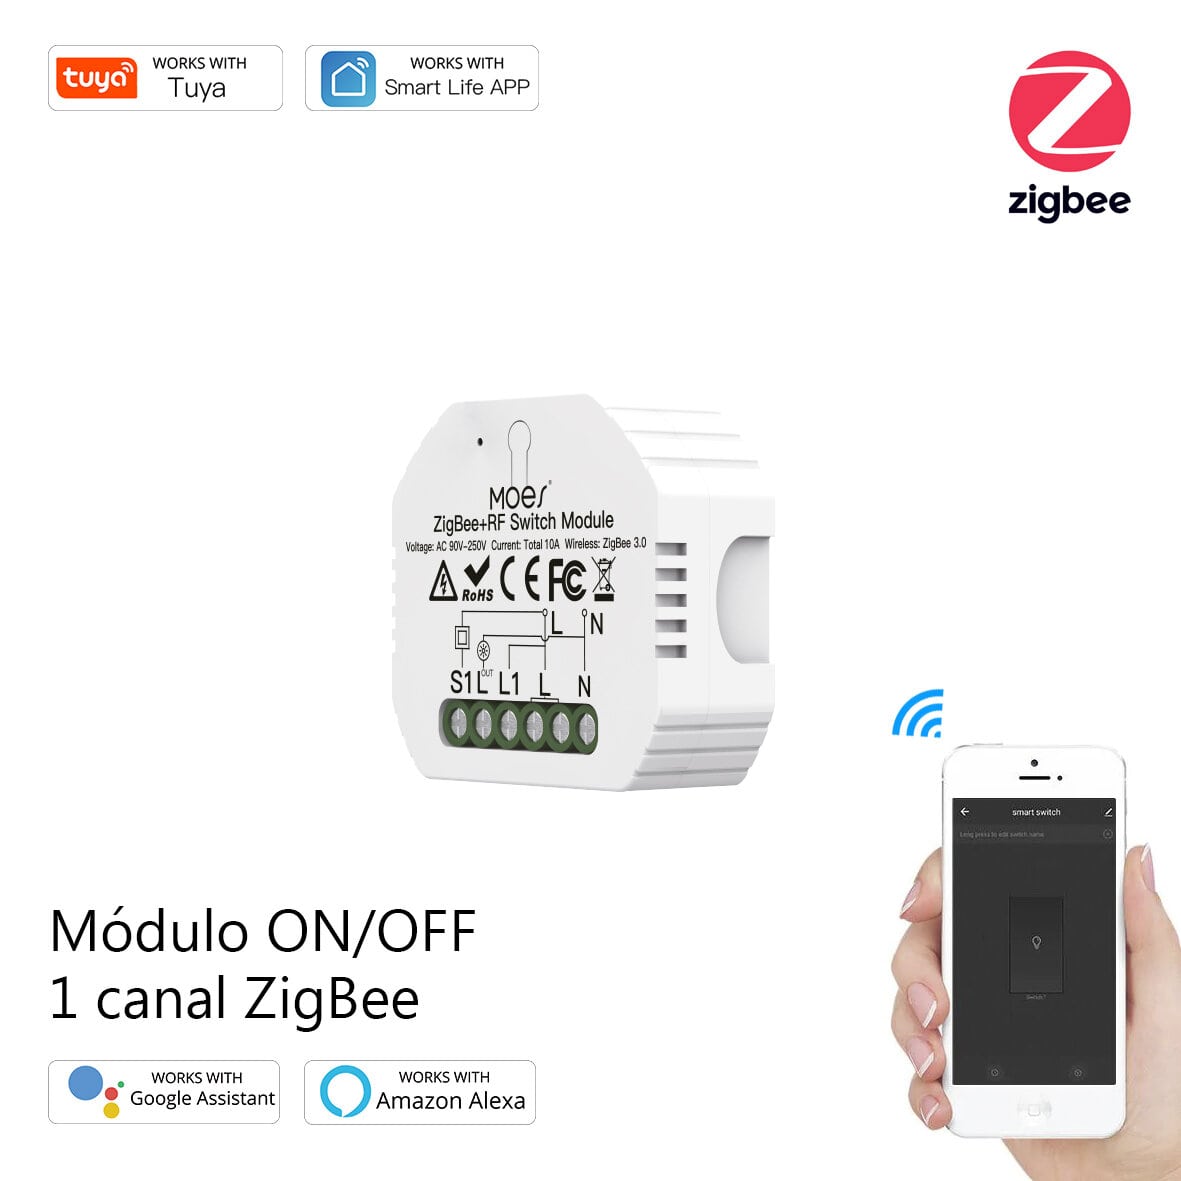 MOES Tuya ZigBee 3.0 RF Switch Module, Smart Light Switch Module 1/2 Gang